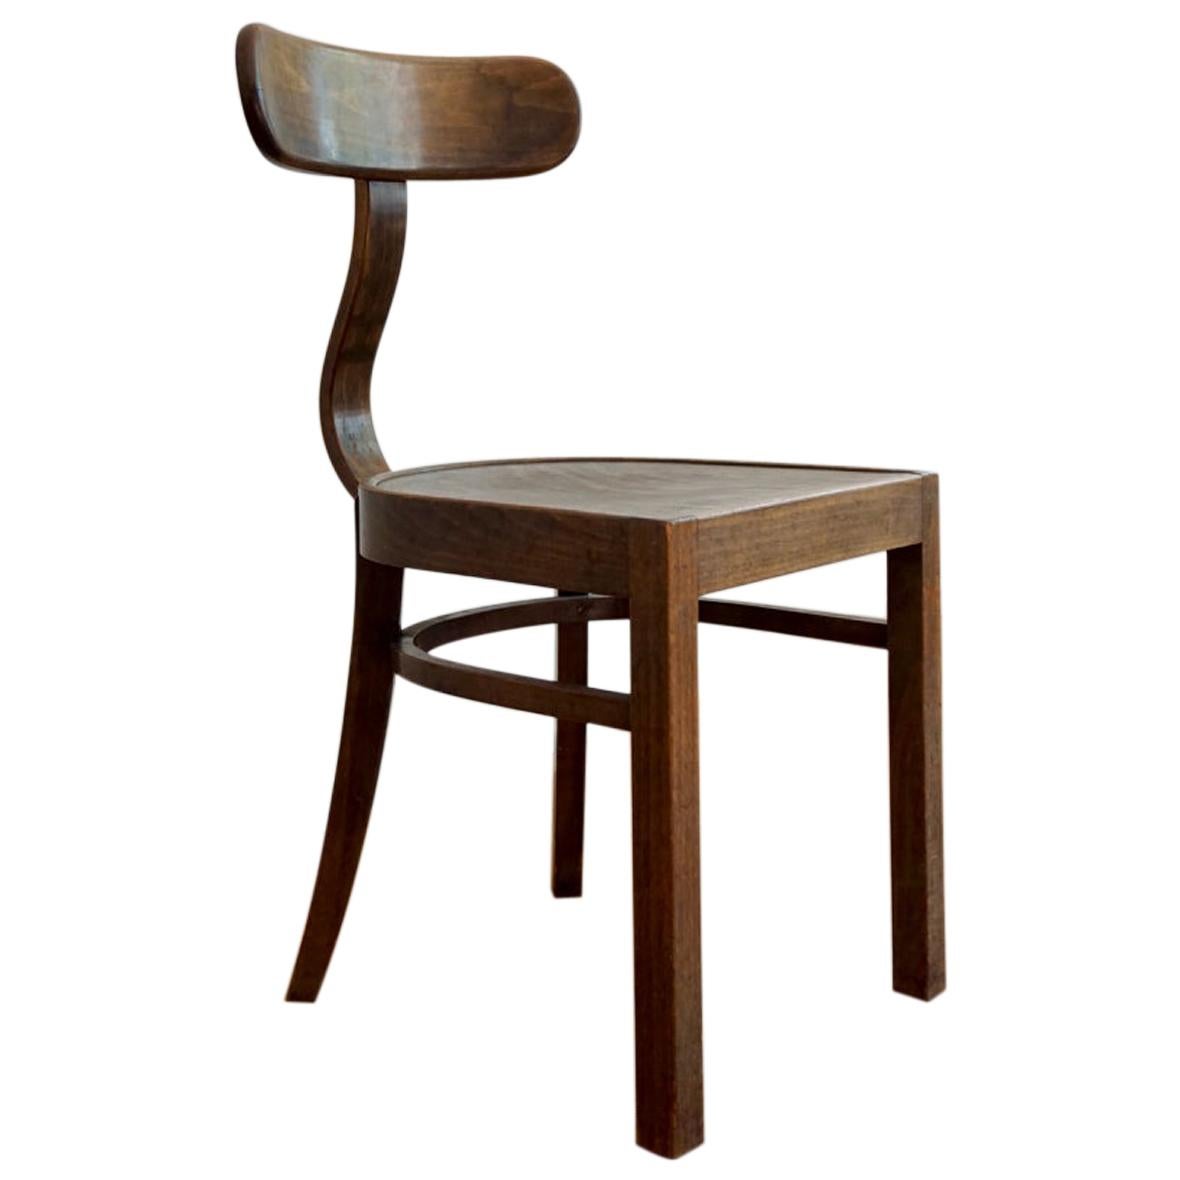 Lajos Kozma 1930s Hungarian Bent Wood Chair Designed for Heisler, Budapest